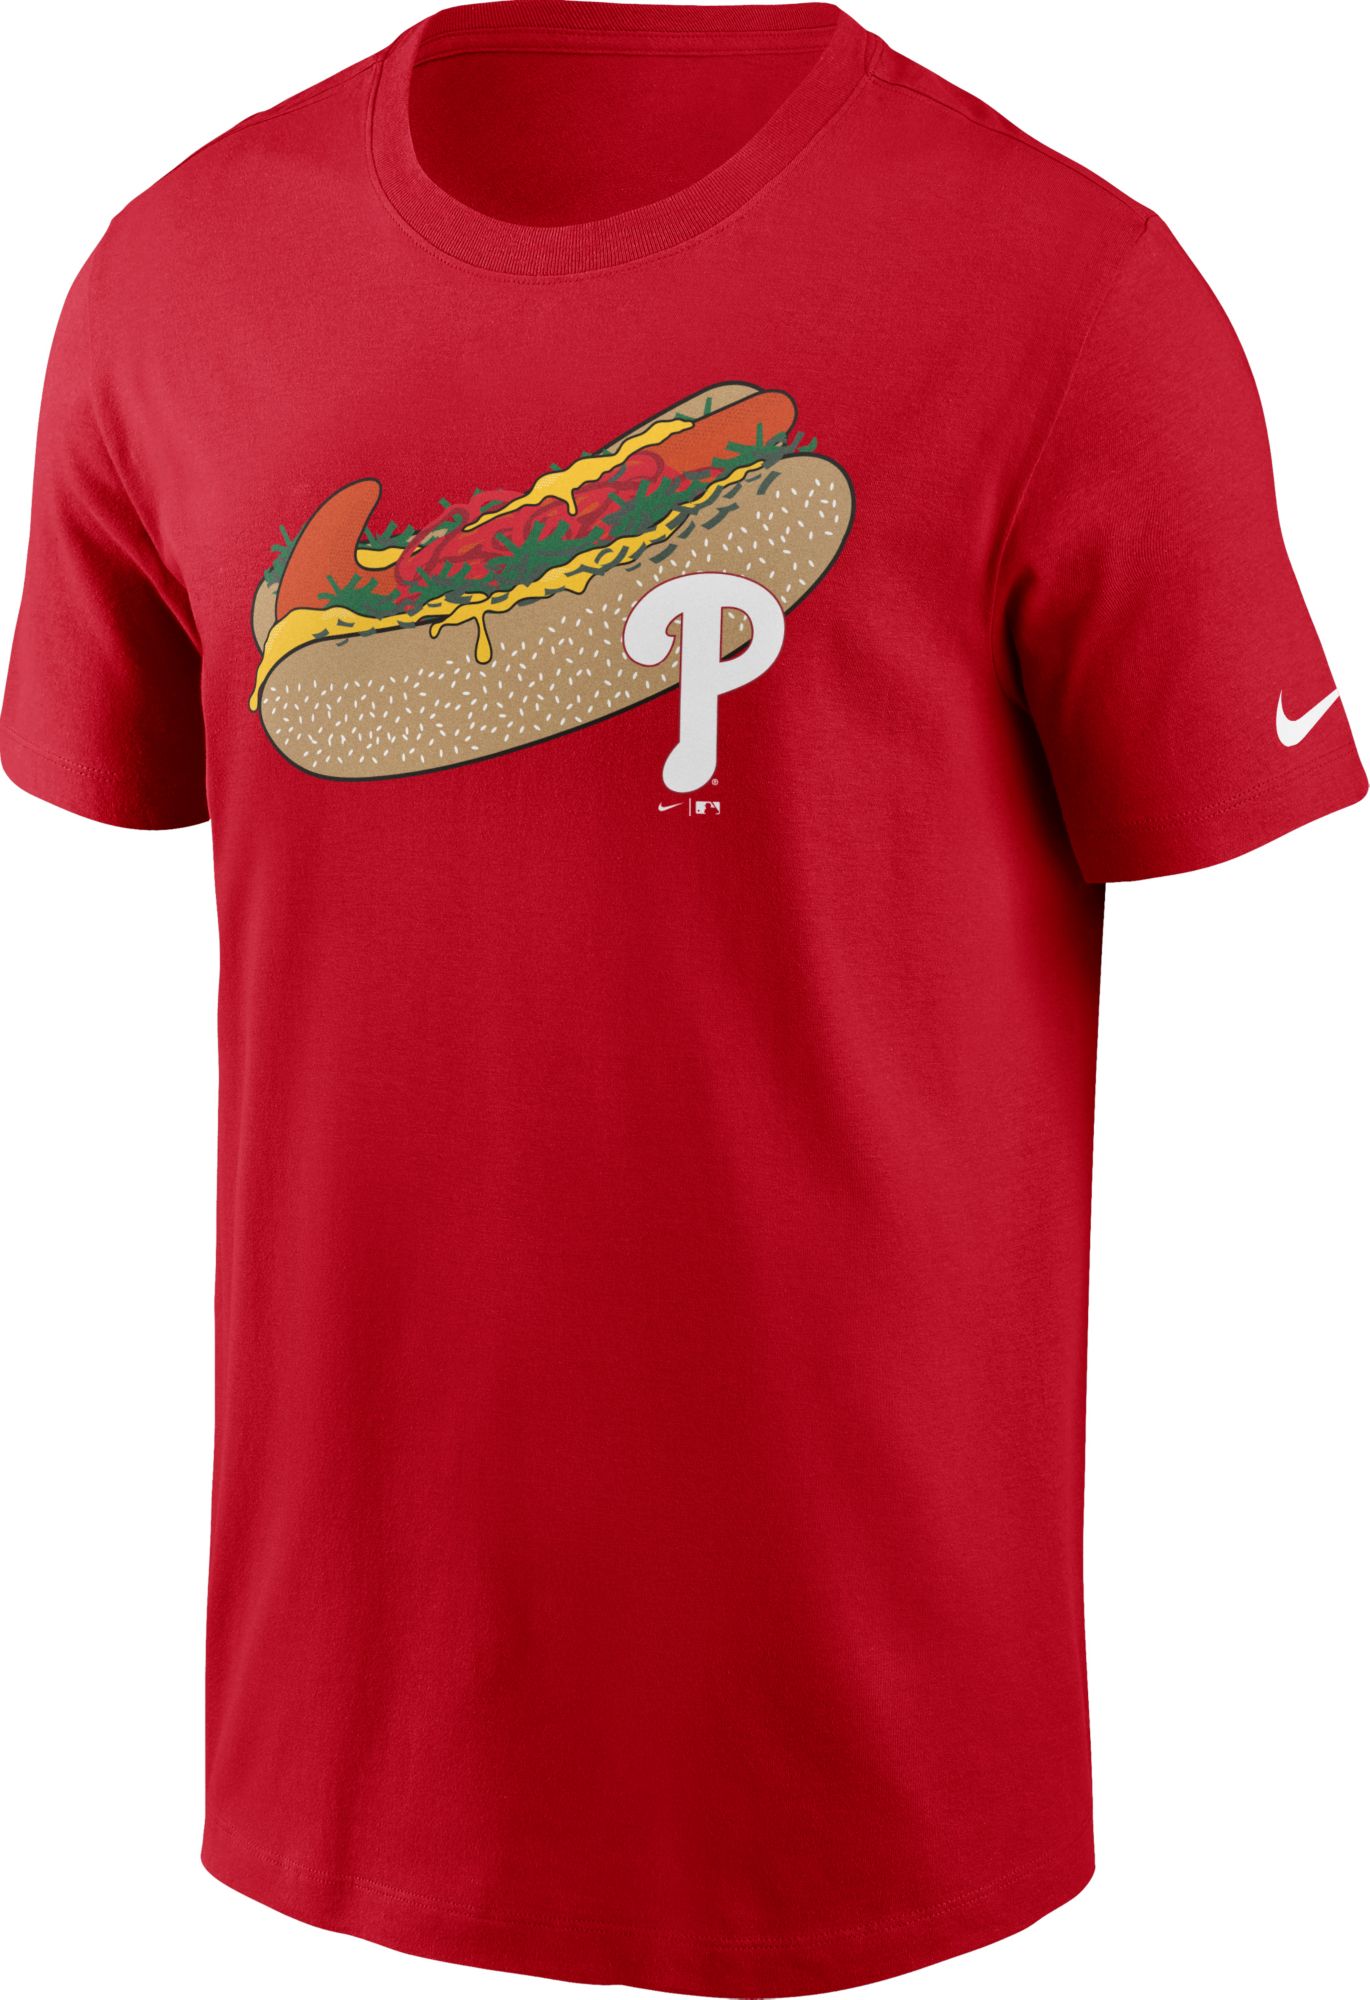 Nike / Men's Philadelphia Phillies Red Local Dog T-Shirt